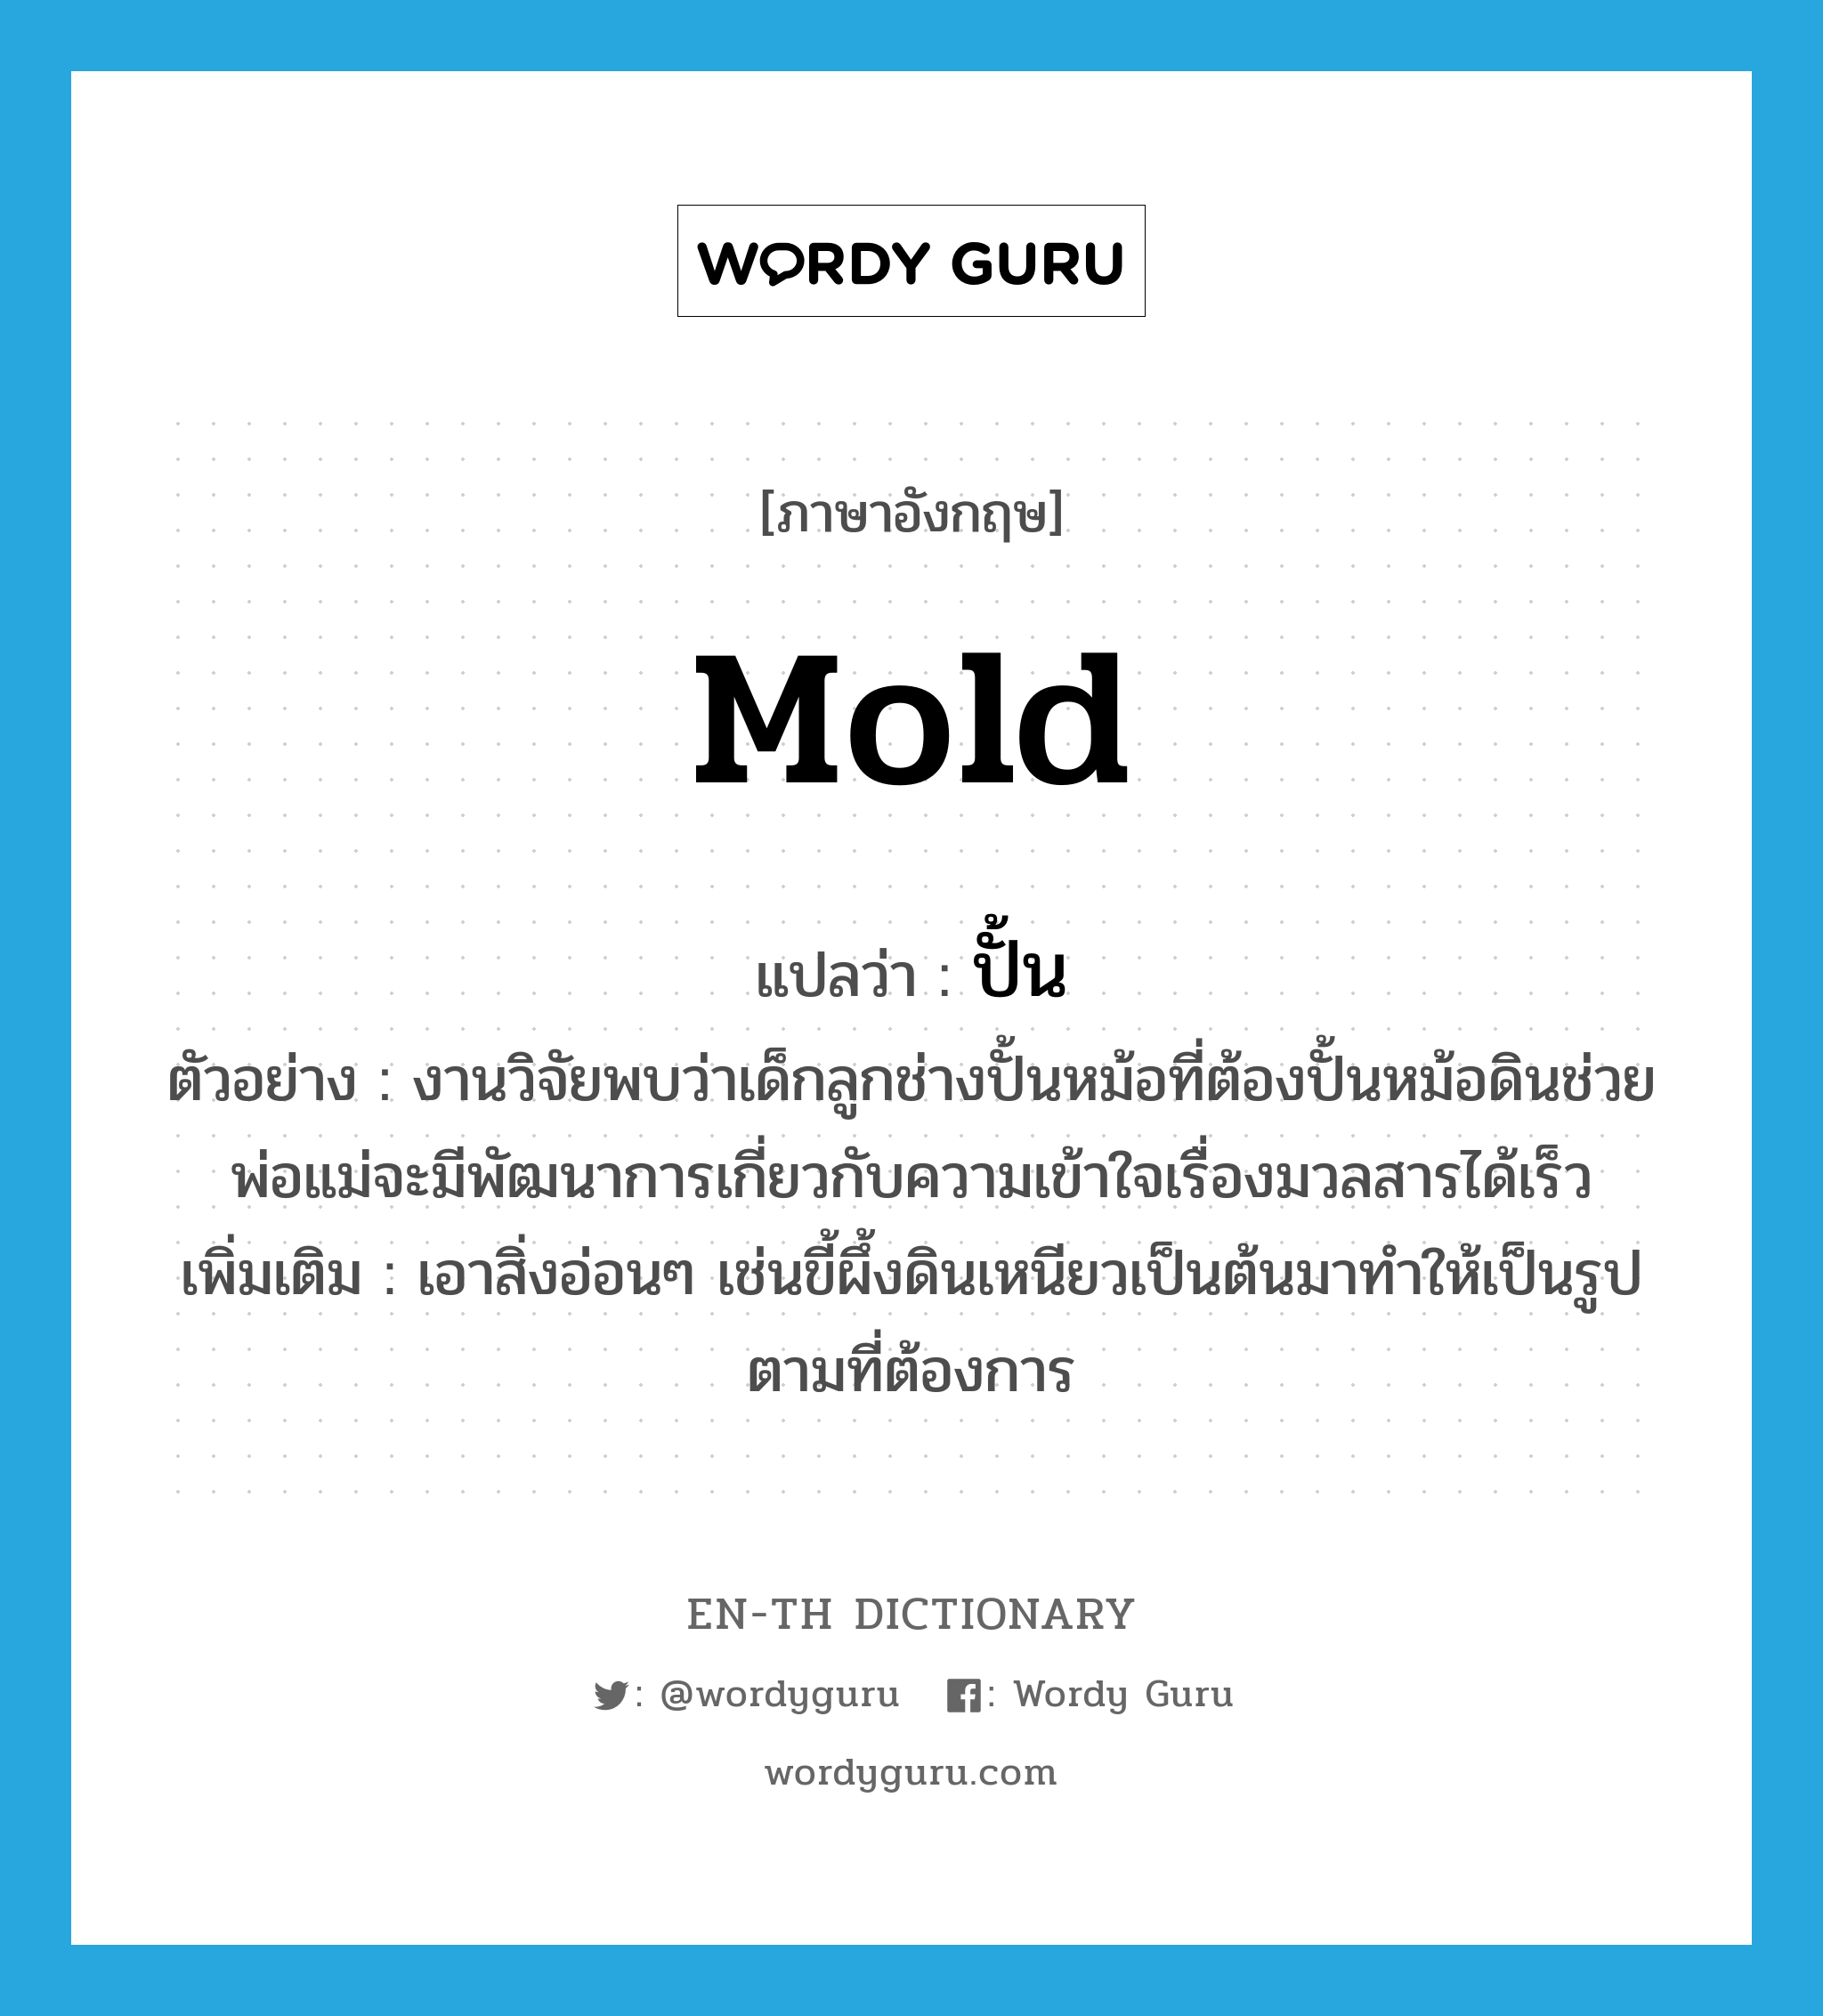 mold แปลว่า?, คำศัพท์ภาษาอังกฤษ mold แปลว่า ปั้น ประเภท V ตัวอย่าง งานวิจัยพบว่าเด็กลูกช่างปั้นหม้อที่ต้องปั้นหม้อดินช่วยพ่อแม่จะมีพัฒนาการเกี่ยวกับความเข้าใจเรื่องมวลสารได้เร็ว เพิ่มเติม เอาสิ่งอ่อนๆ เช่นขี้ผึ้งดินเหนียวเป็นต้นมาทำให้เป็นรูปตามที่ต้องการ หมวด V